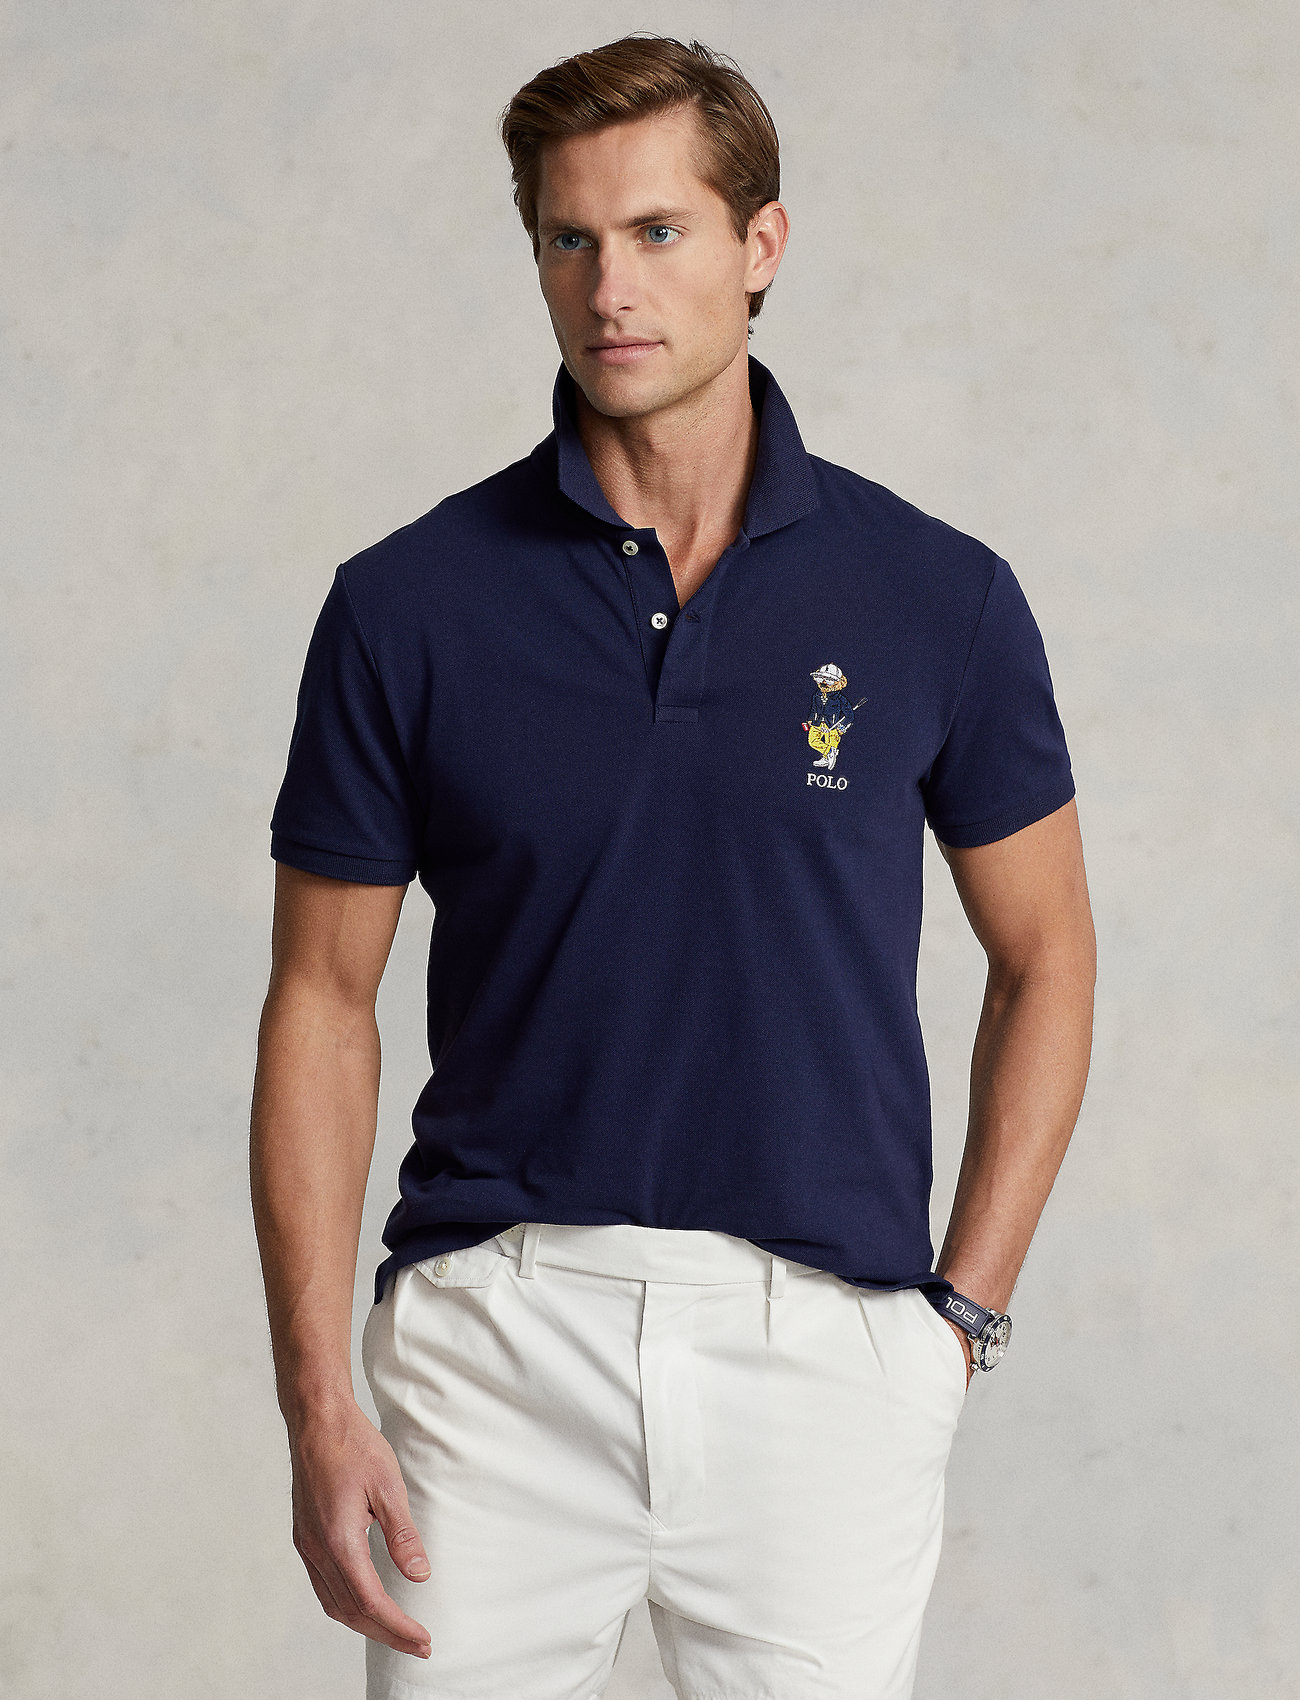 Ralph Lauren Golf Golfer Polo Bear Knit Polo Shirt - Short-sleeved polos |  